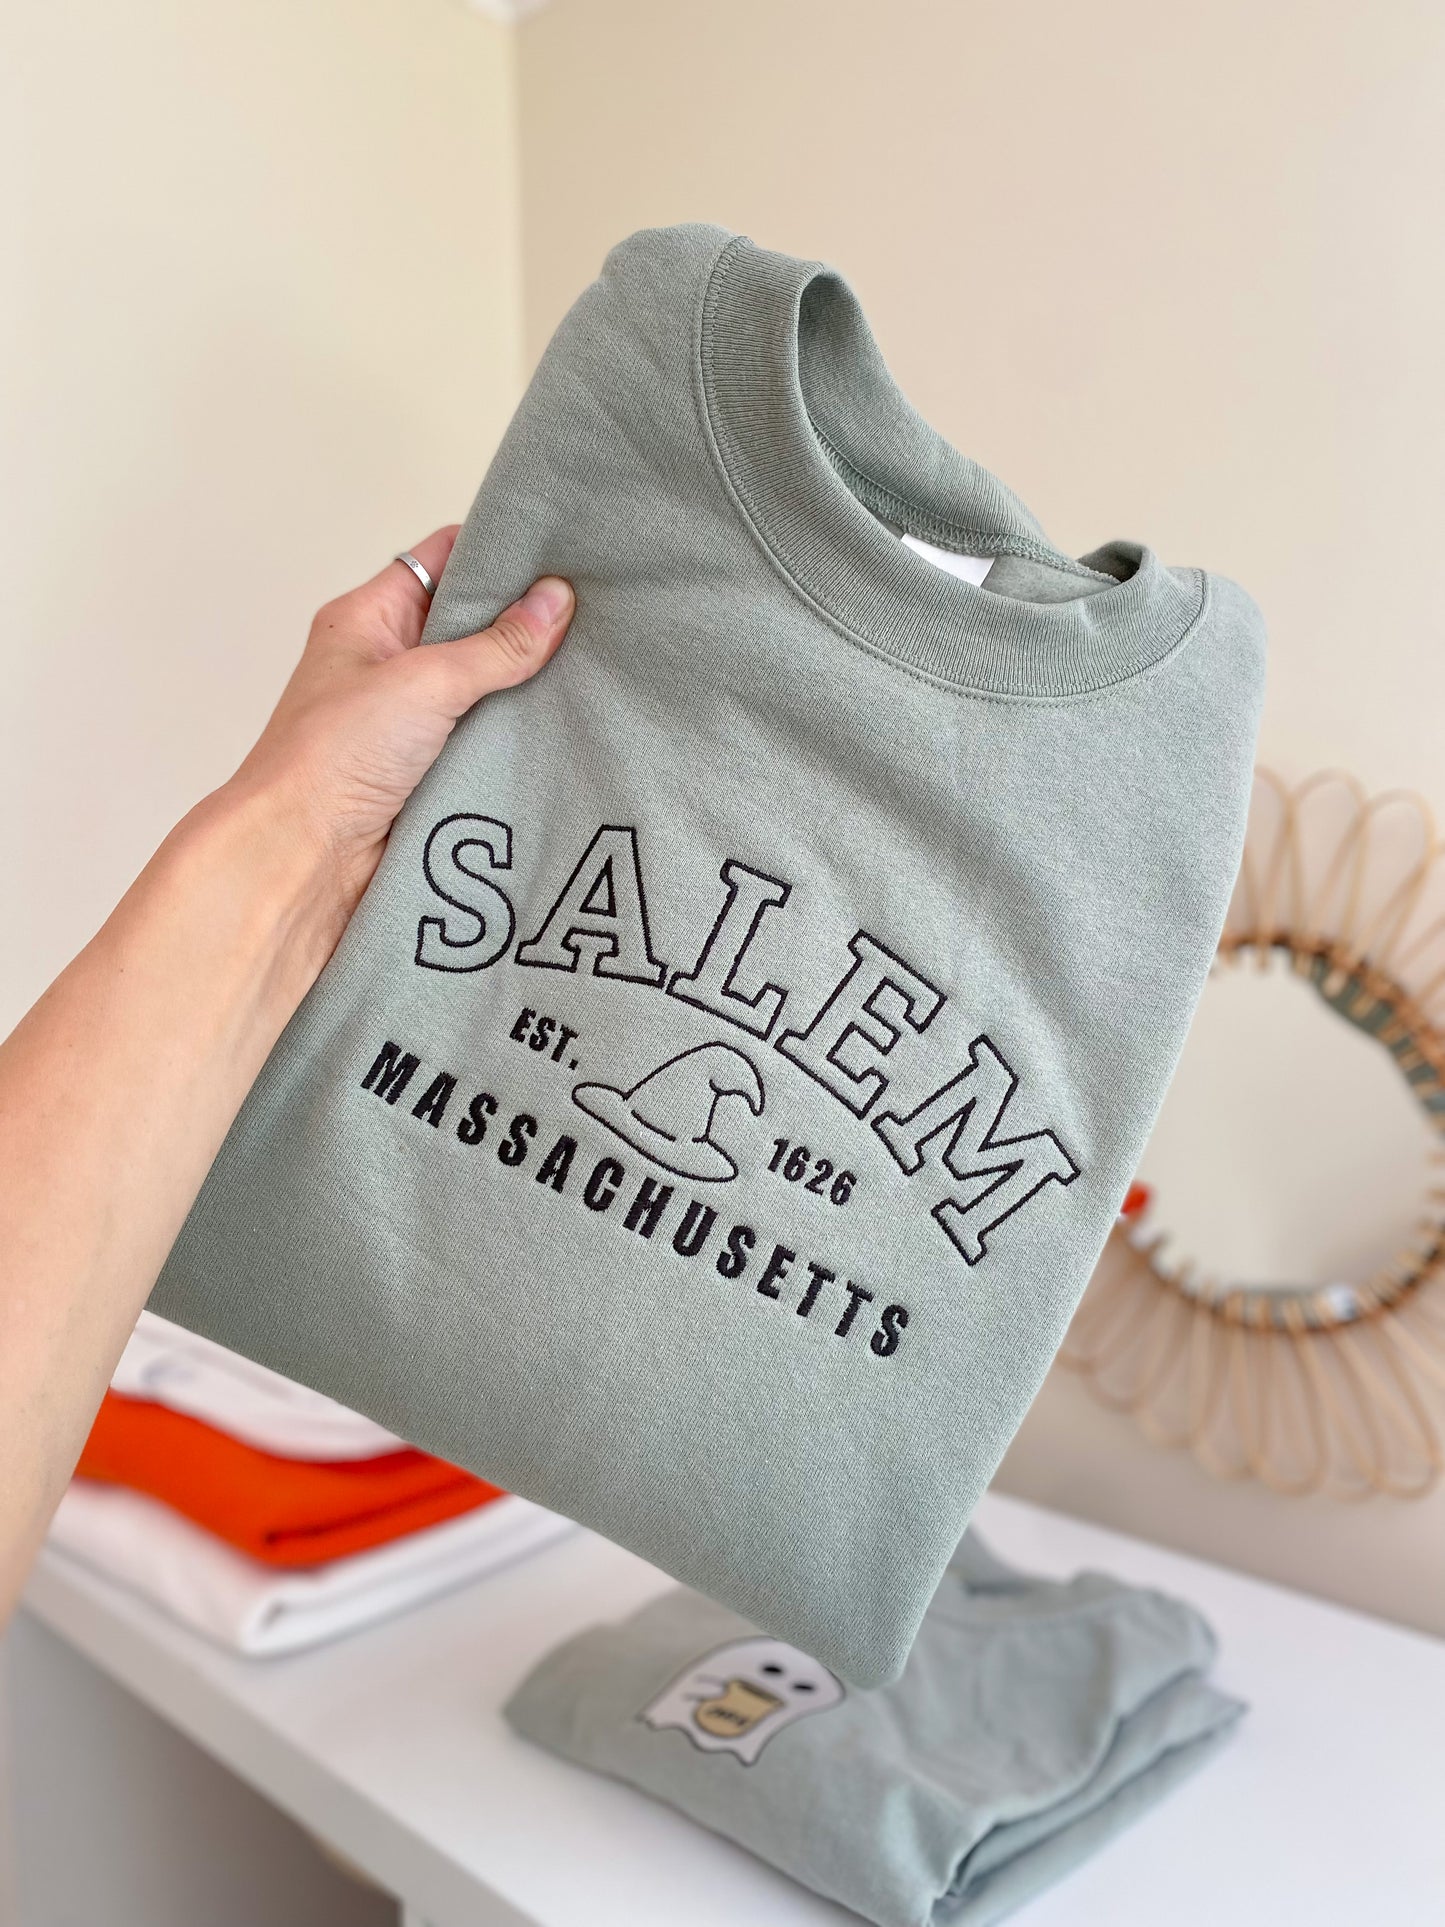 Salem, MA Est. 1626 Crewneck -- Halloween Sweatshirt, Embroidered, Choose Your Color!